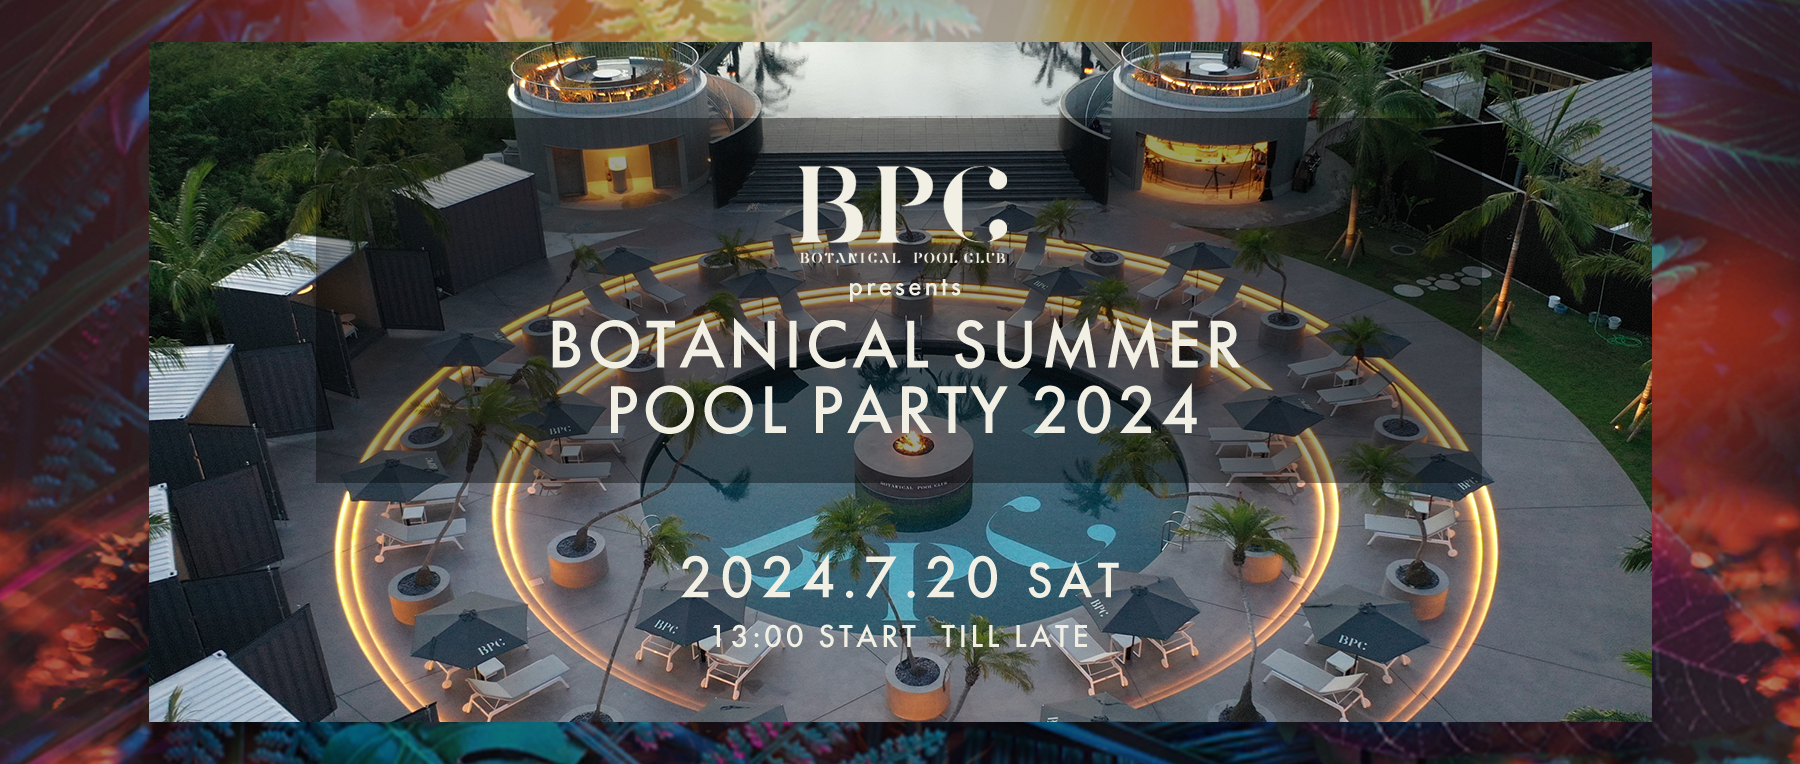 [Finished]Botanical Summer Pool Party 2024's images1